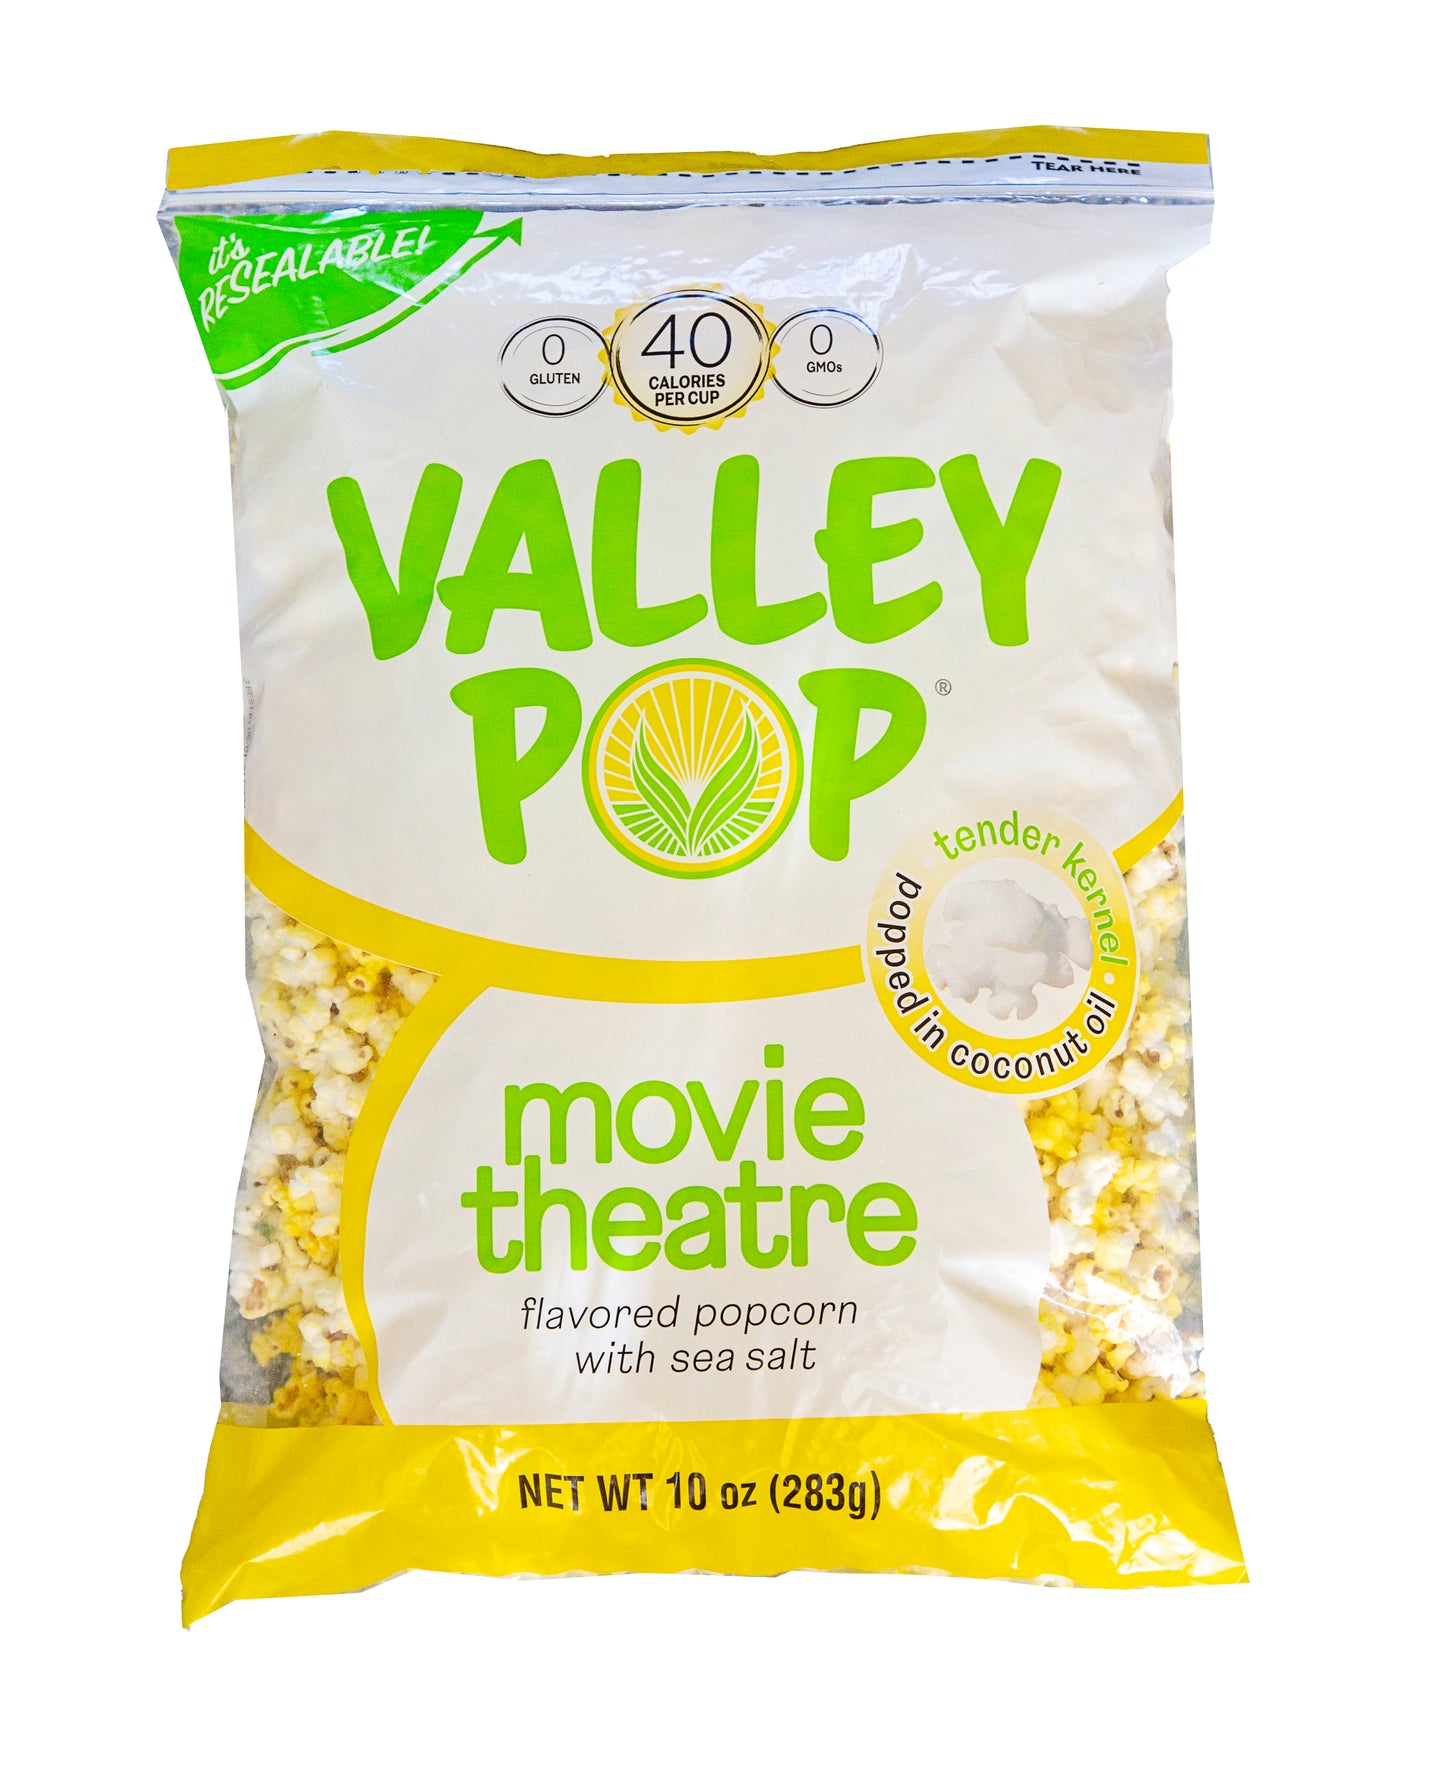 8ct - 10oz Case of Yellow Popcorn (Movie Theater)